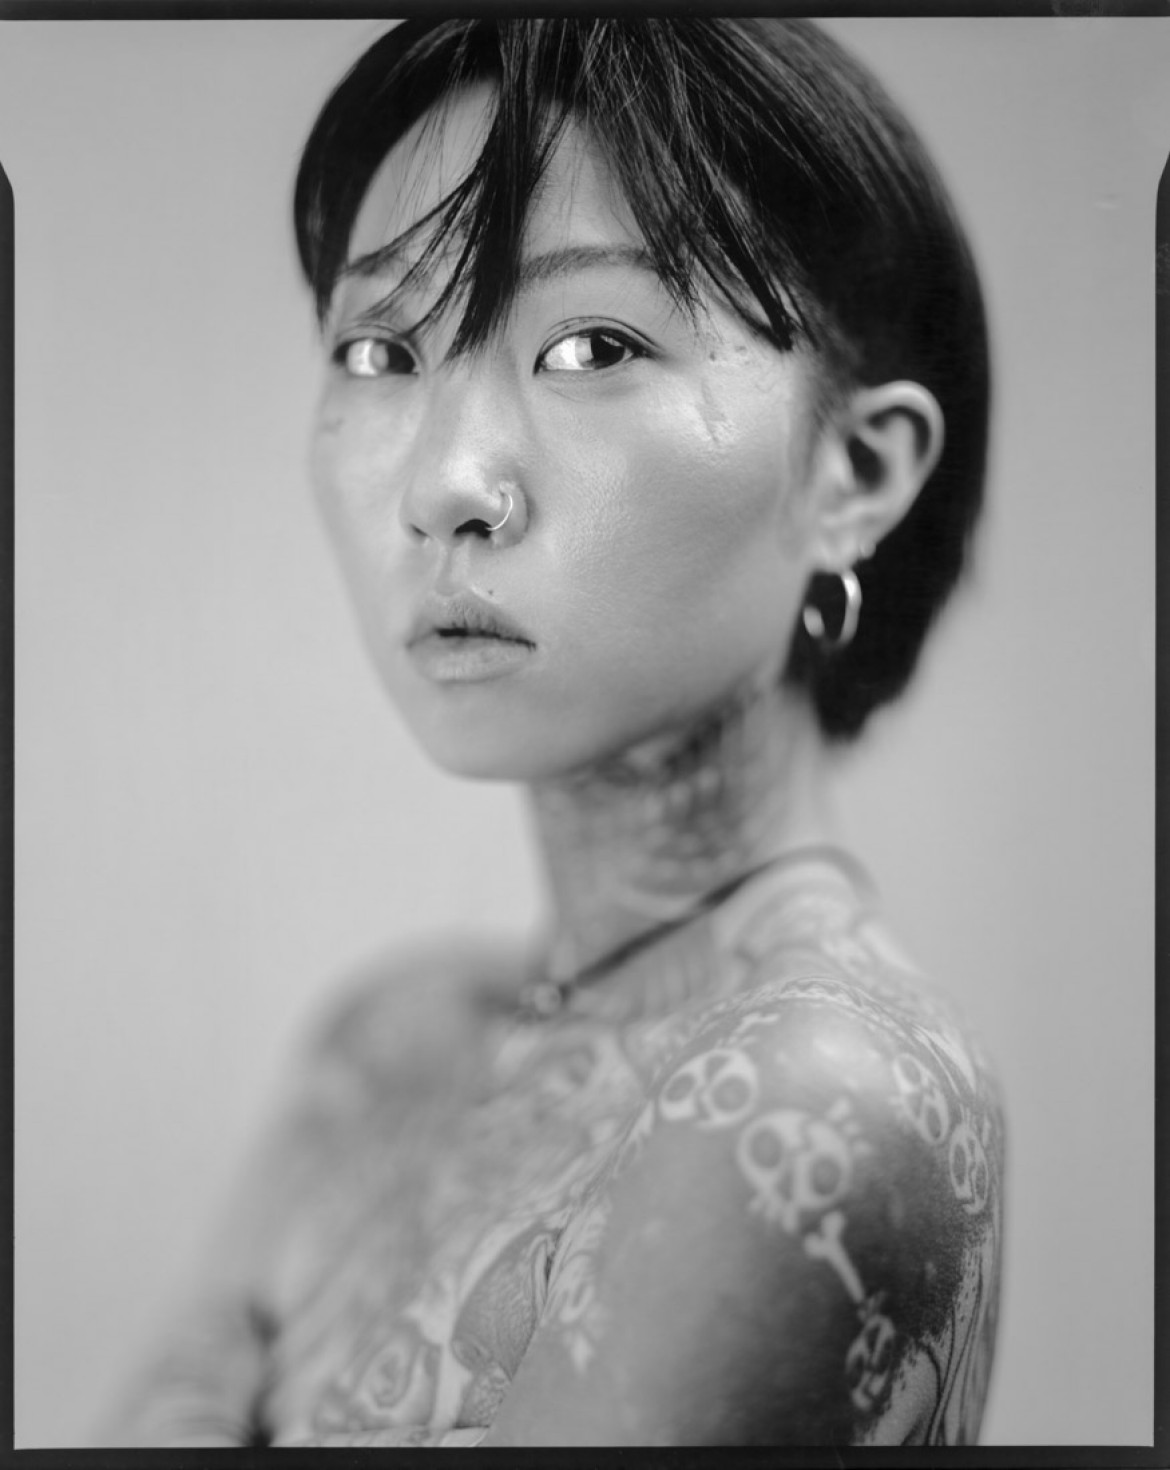 fot. Tim Franco, z cyklu "Illicit Ink", 3. nagroda w kategorii Portrait / Monovisions Photography Awards 2019